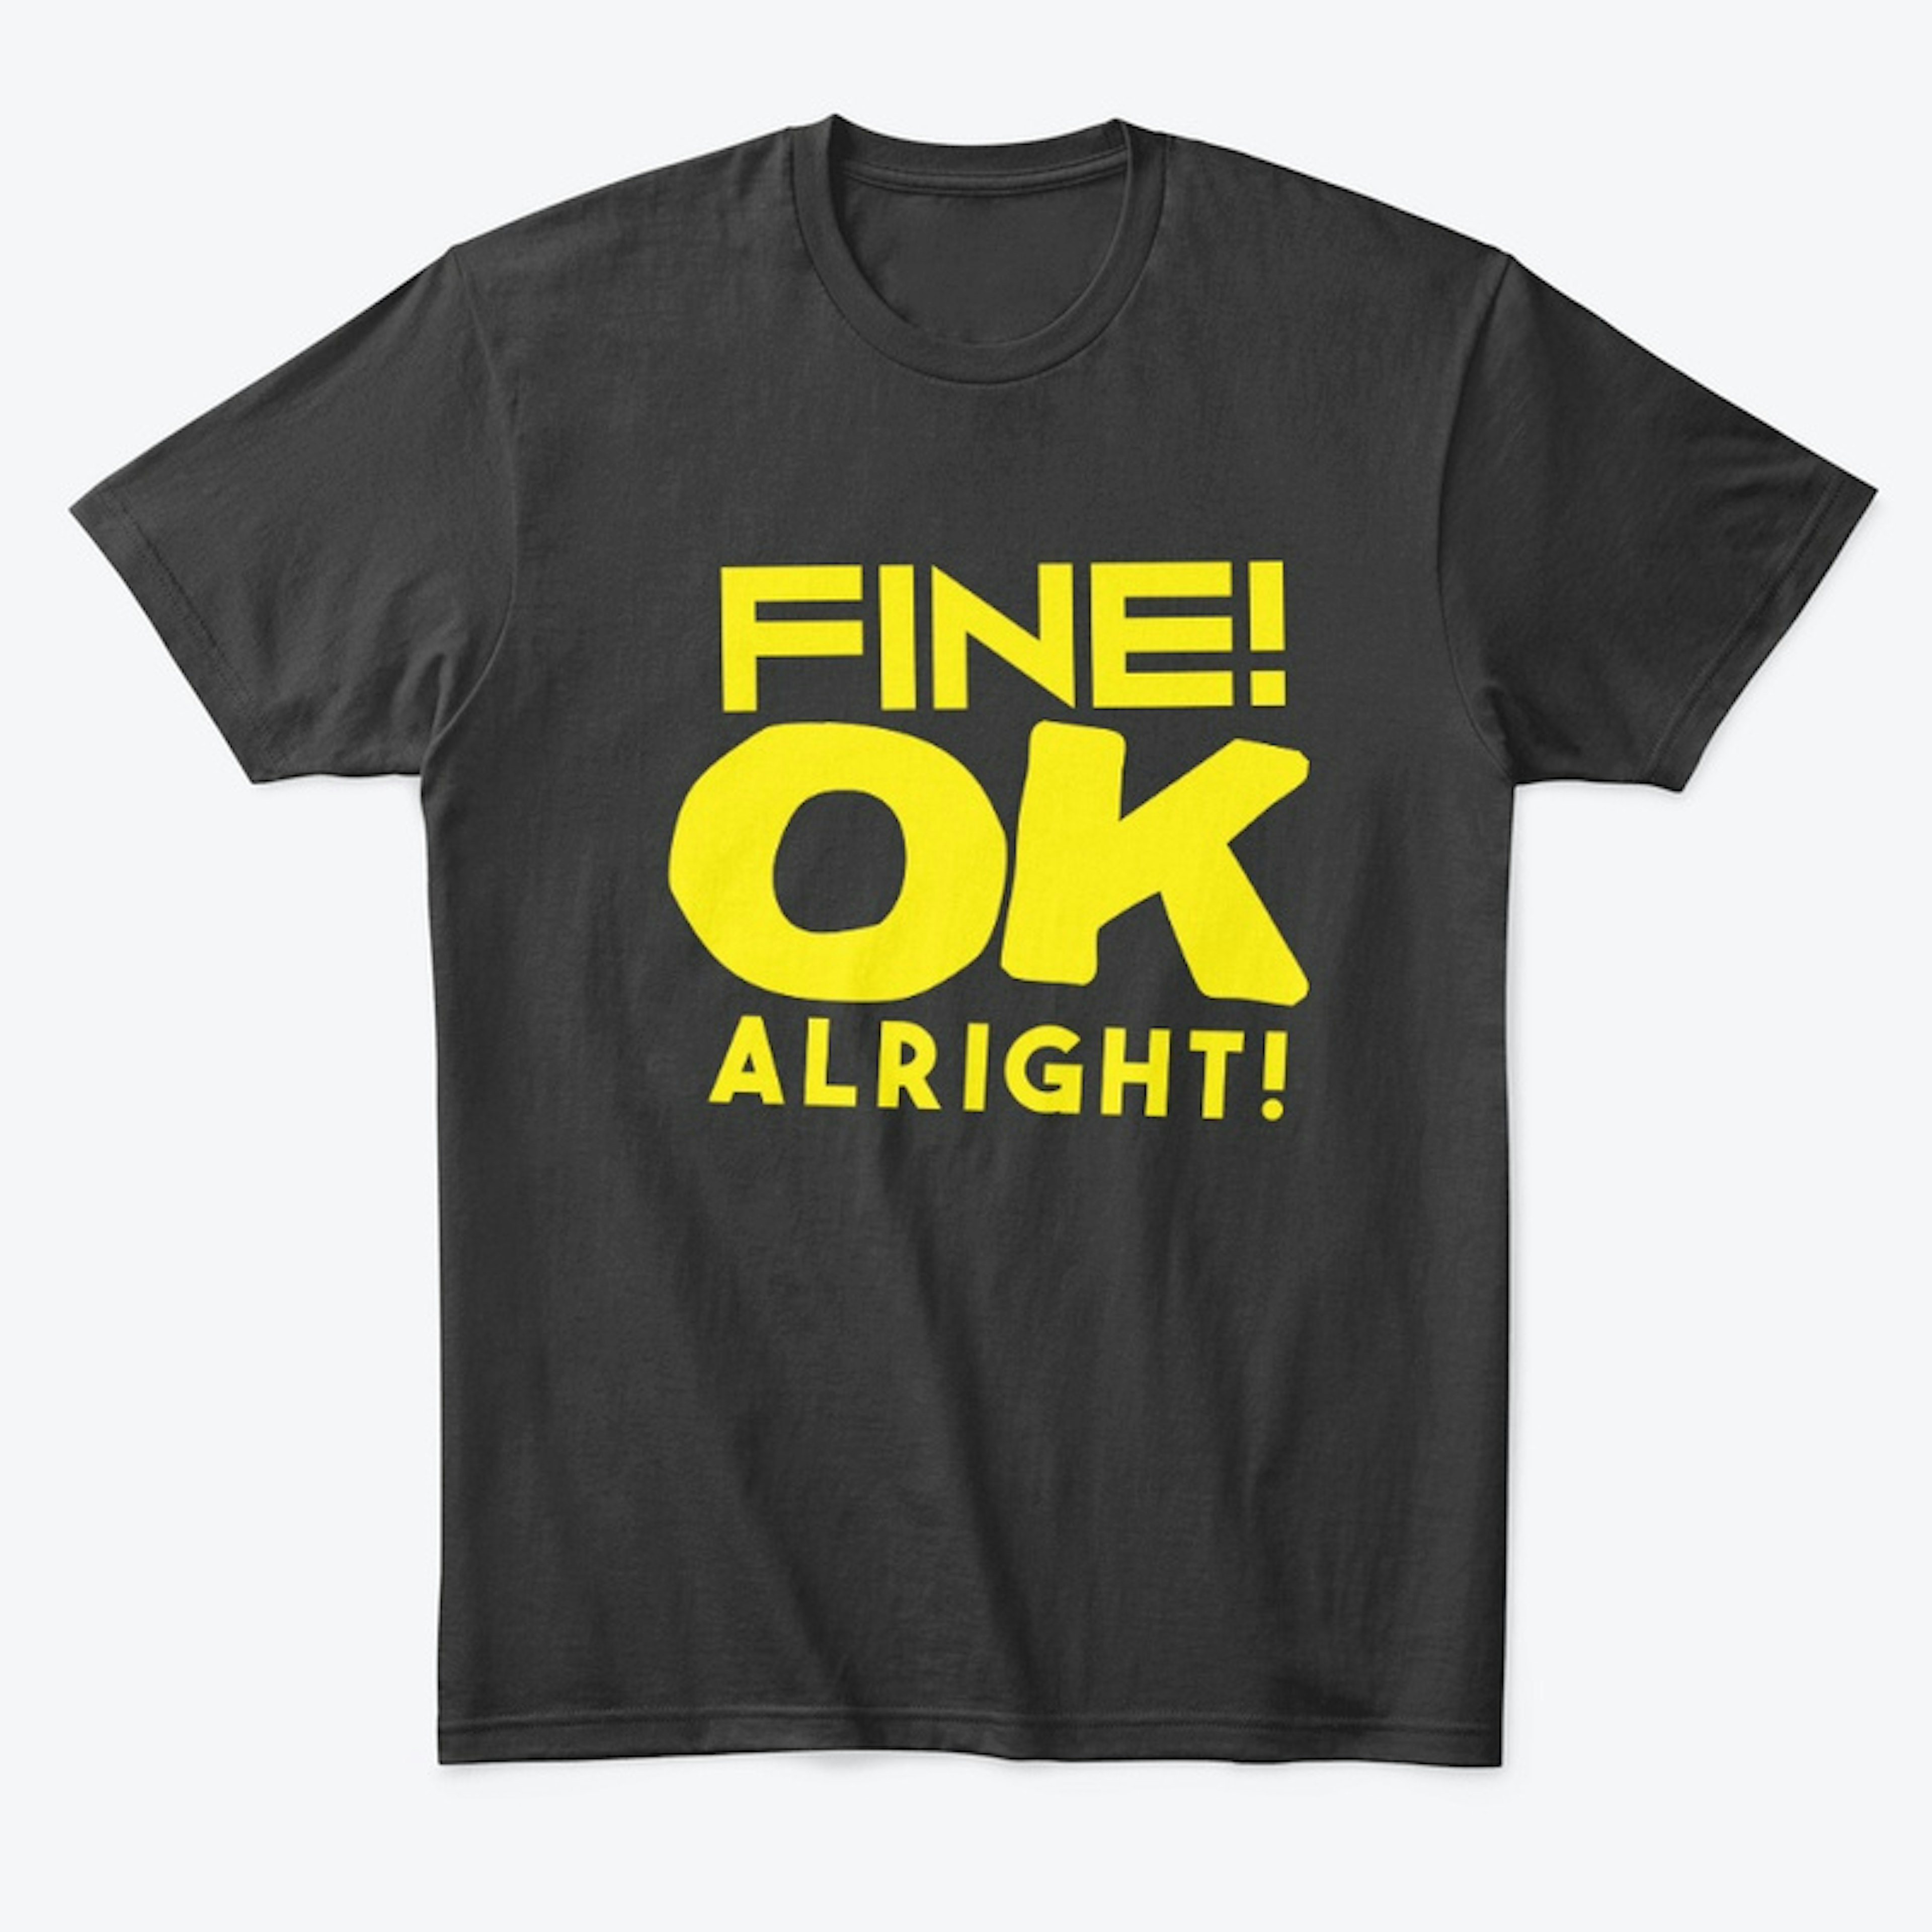 Fine! OK! Alright!